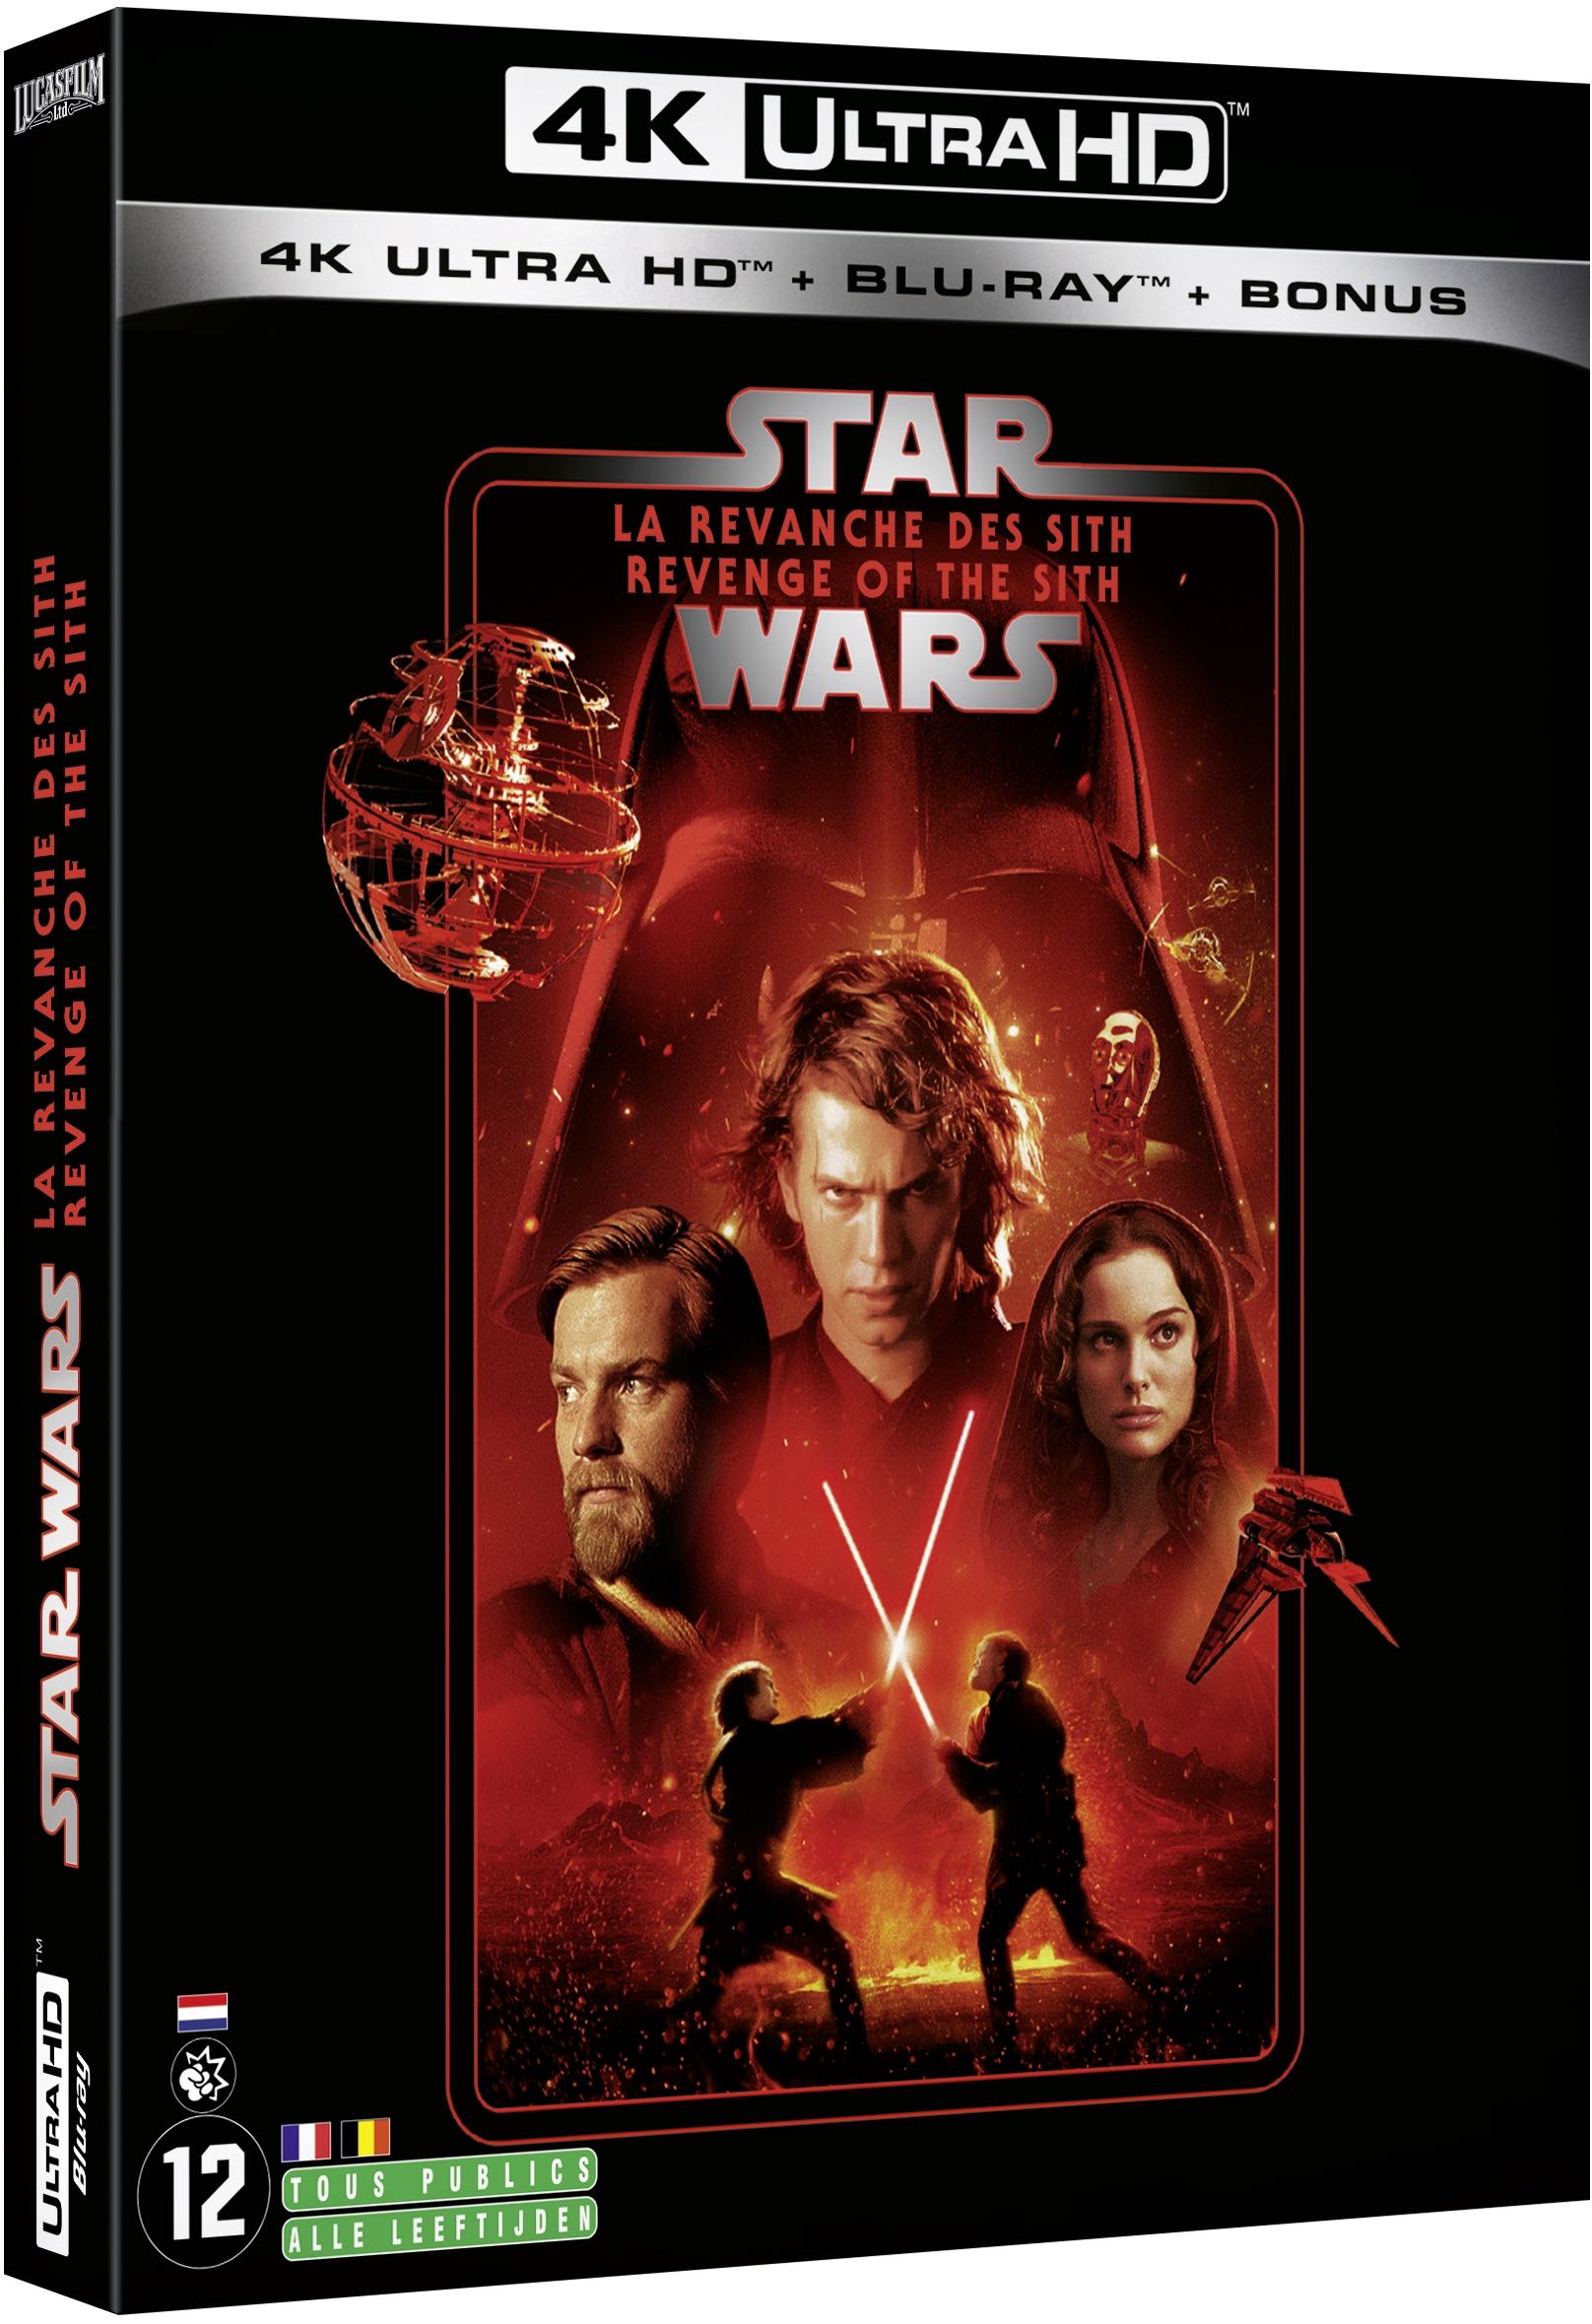 Star Wars - Episode III : La Revanche des Sith (4K Ultra HD + Blu-ray)